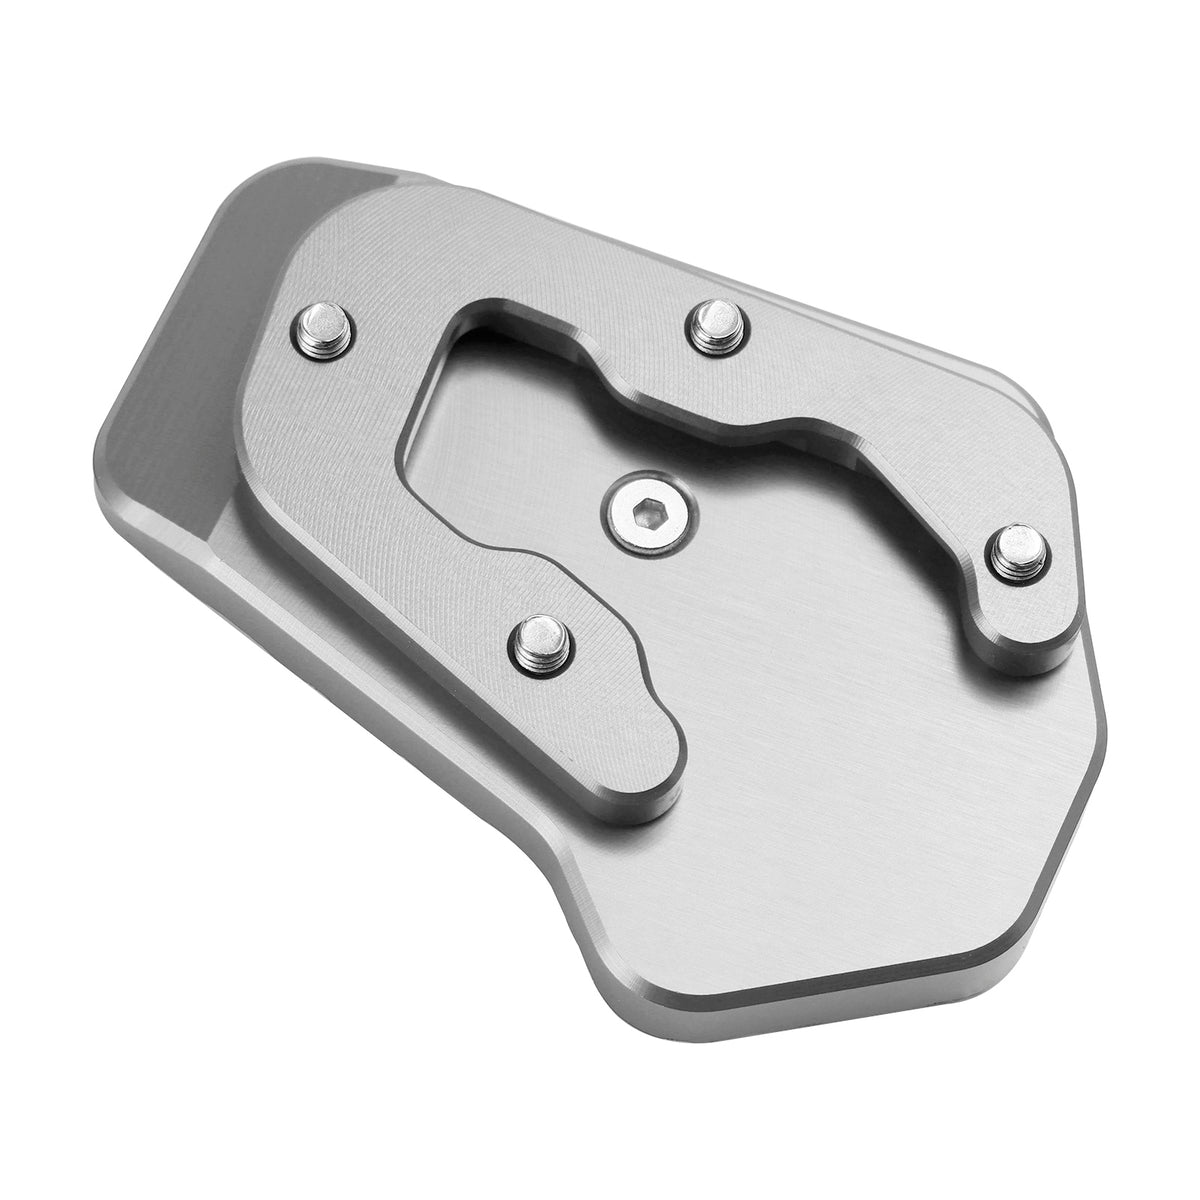 Verlängerung Bremsfußpedal Vergrößerer Pad Licht Cnc Für HONDA cmx1100 21-23 Silber